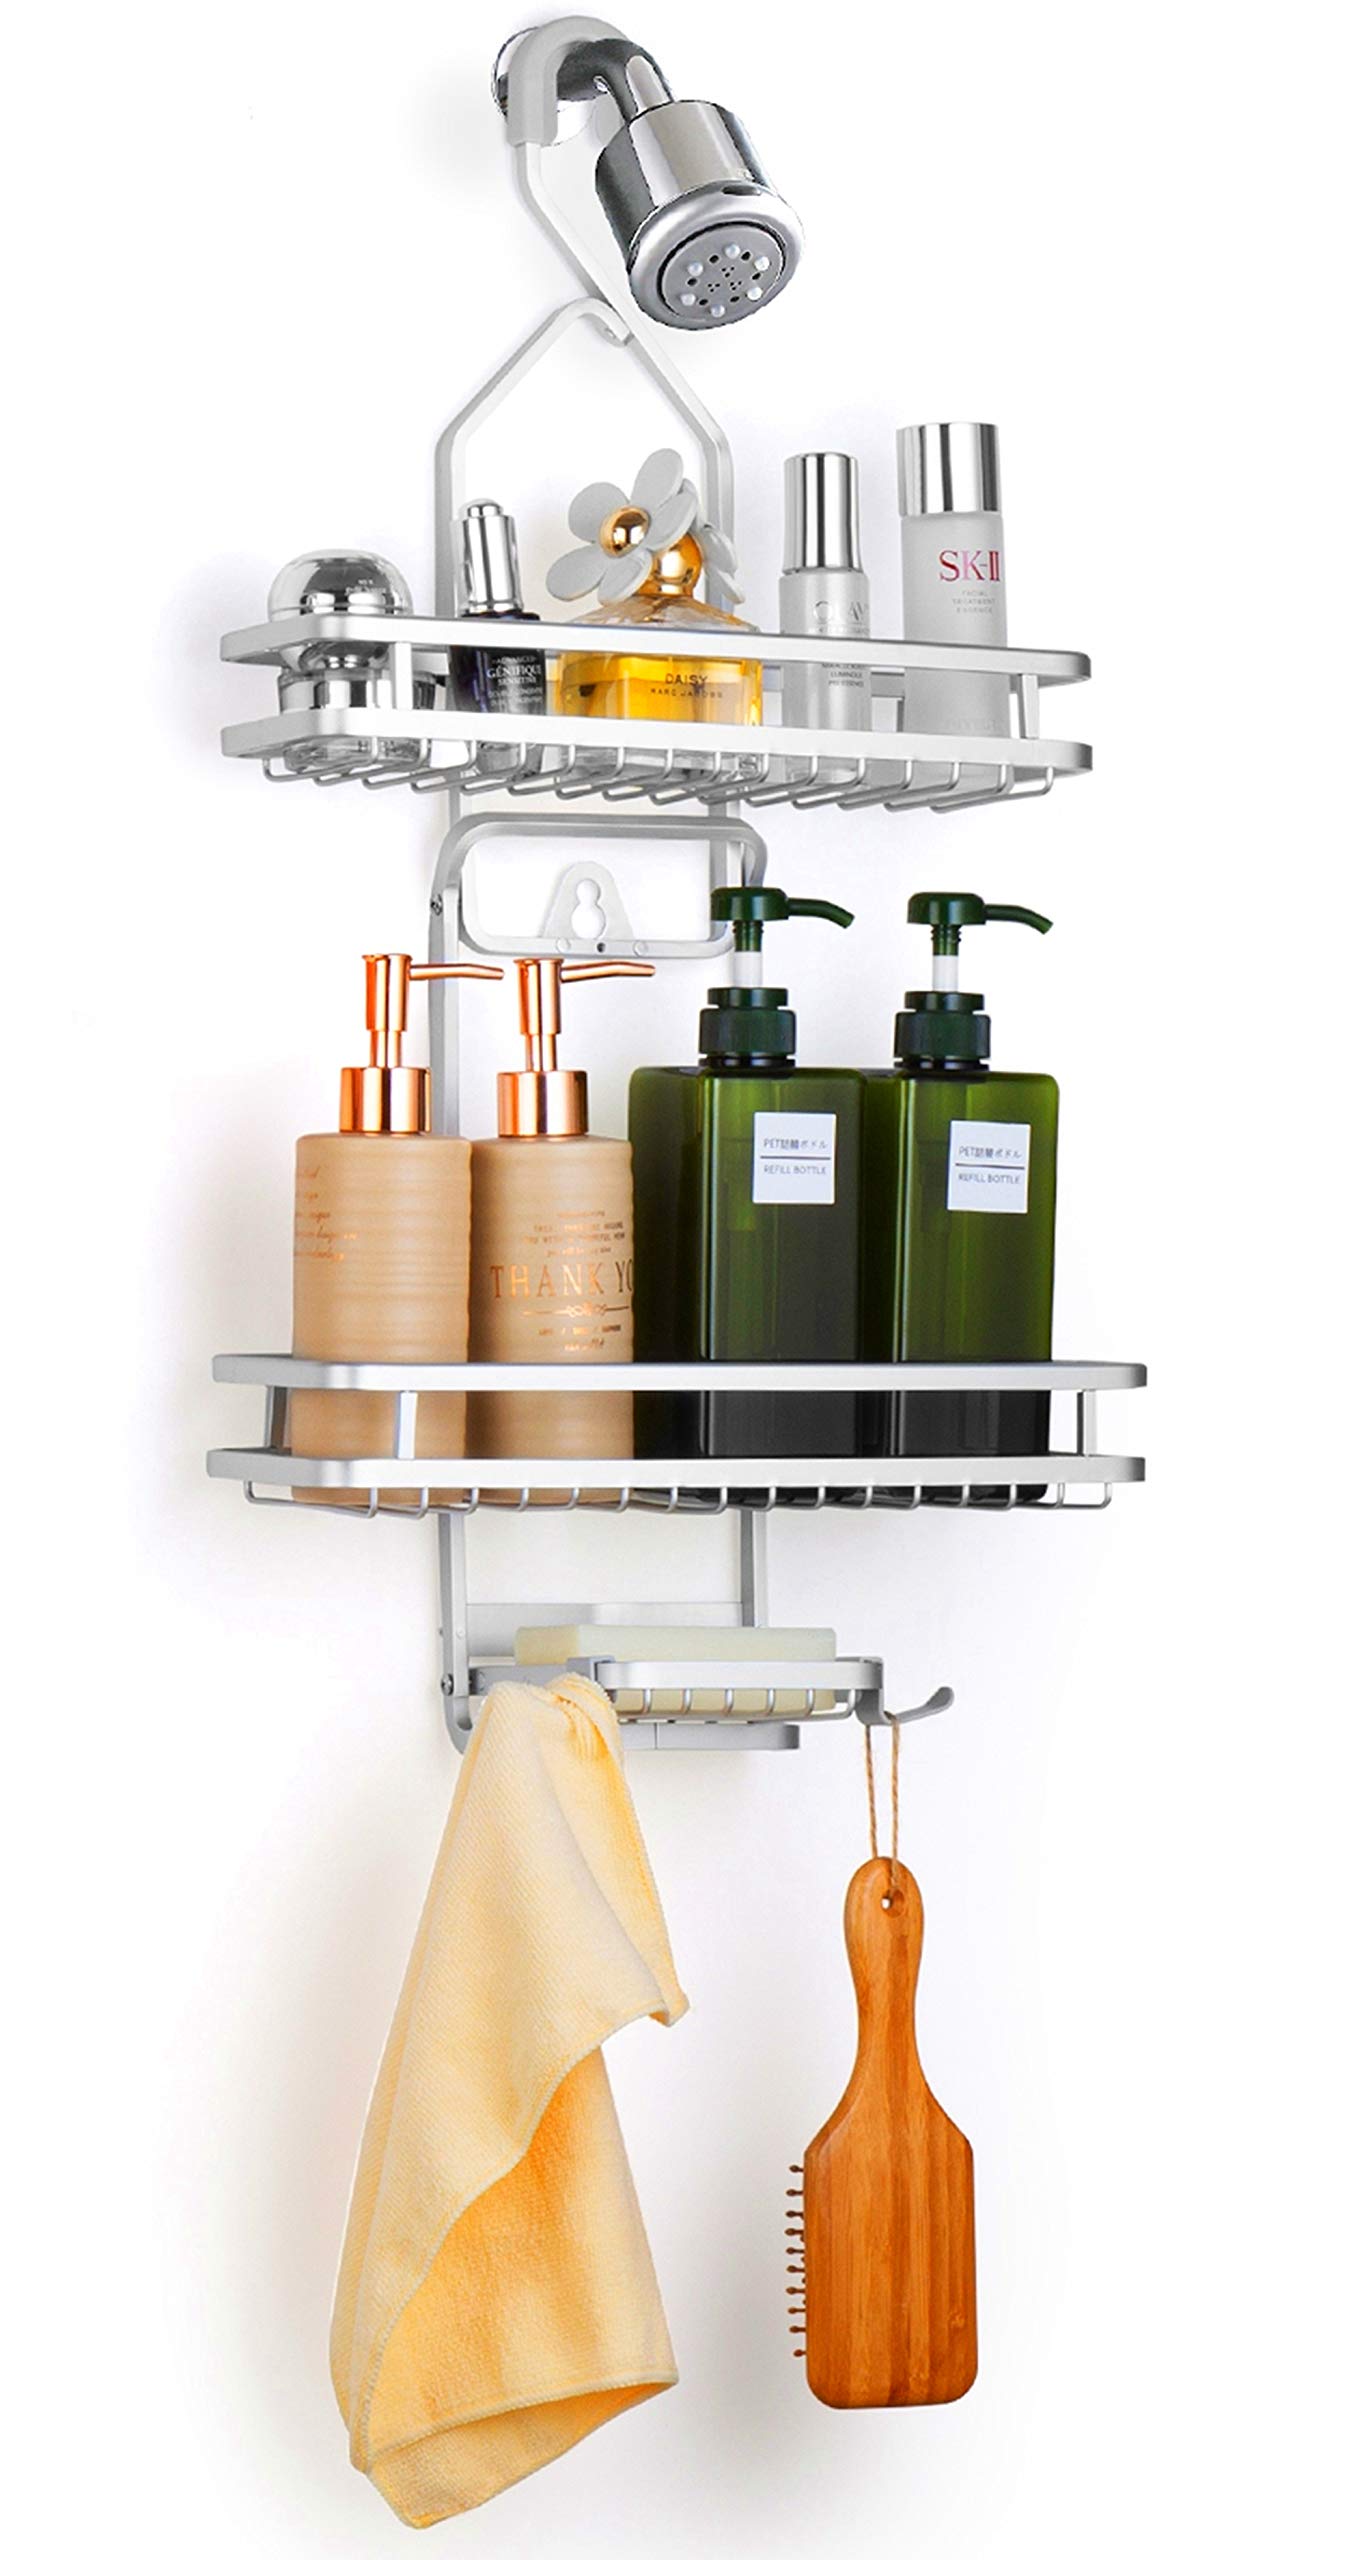 Bextsrack Hanging Shower Caddy, Adjustable Bathroom Shower Organizer Rack